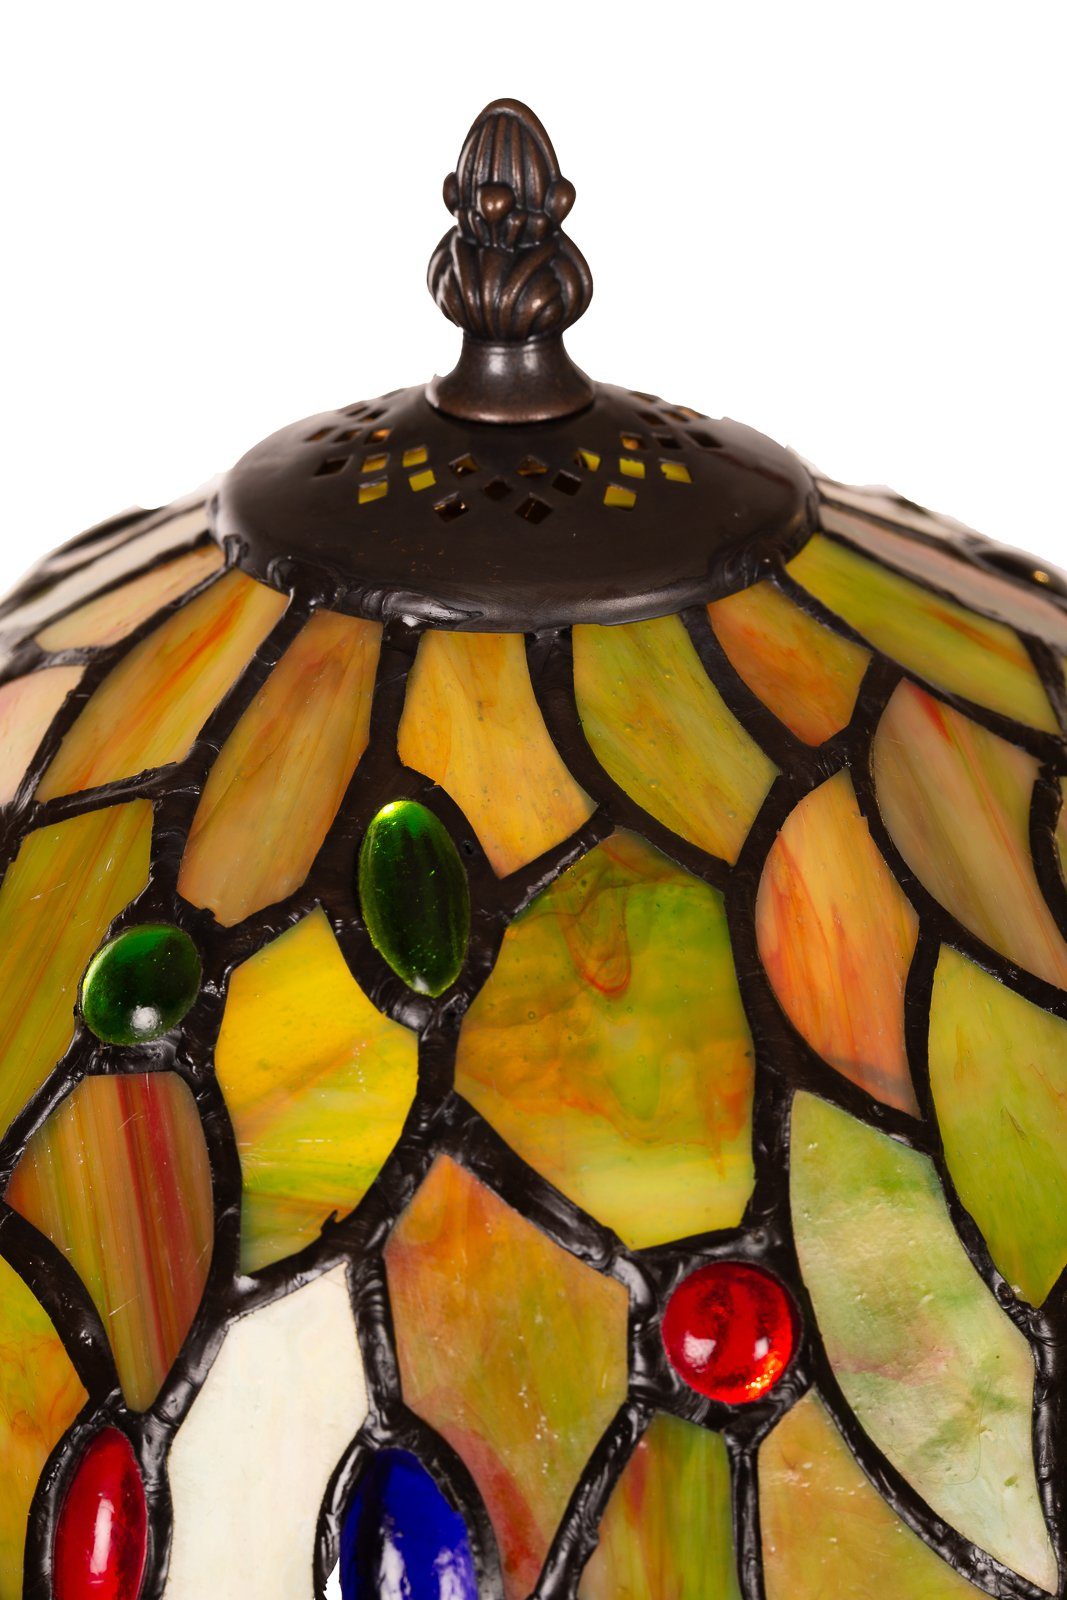 BIRENDY Tiffany Birendy Stehlampe Tiff146 Tischlampe Lampe Motiv Style Libellen